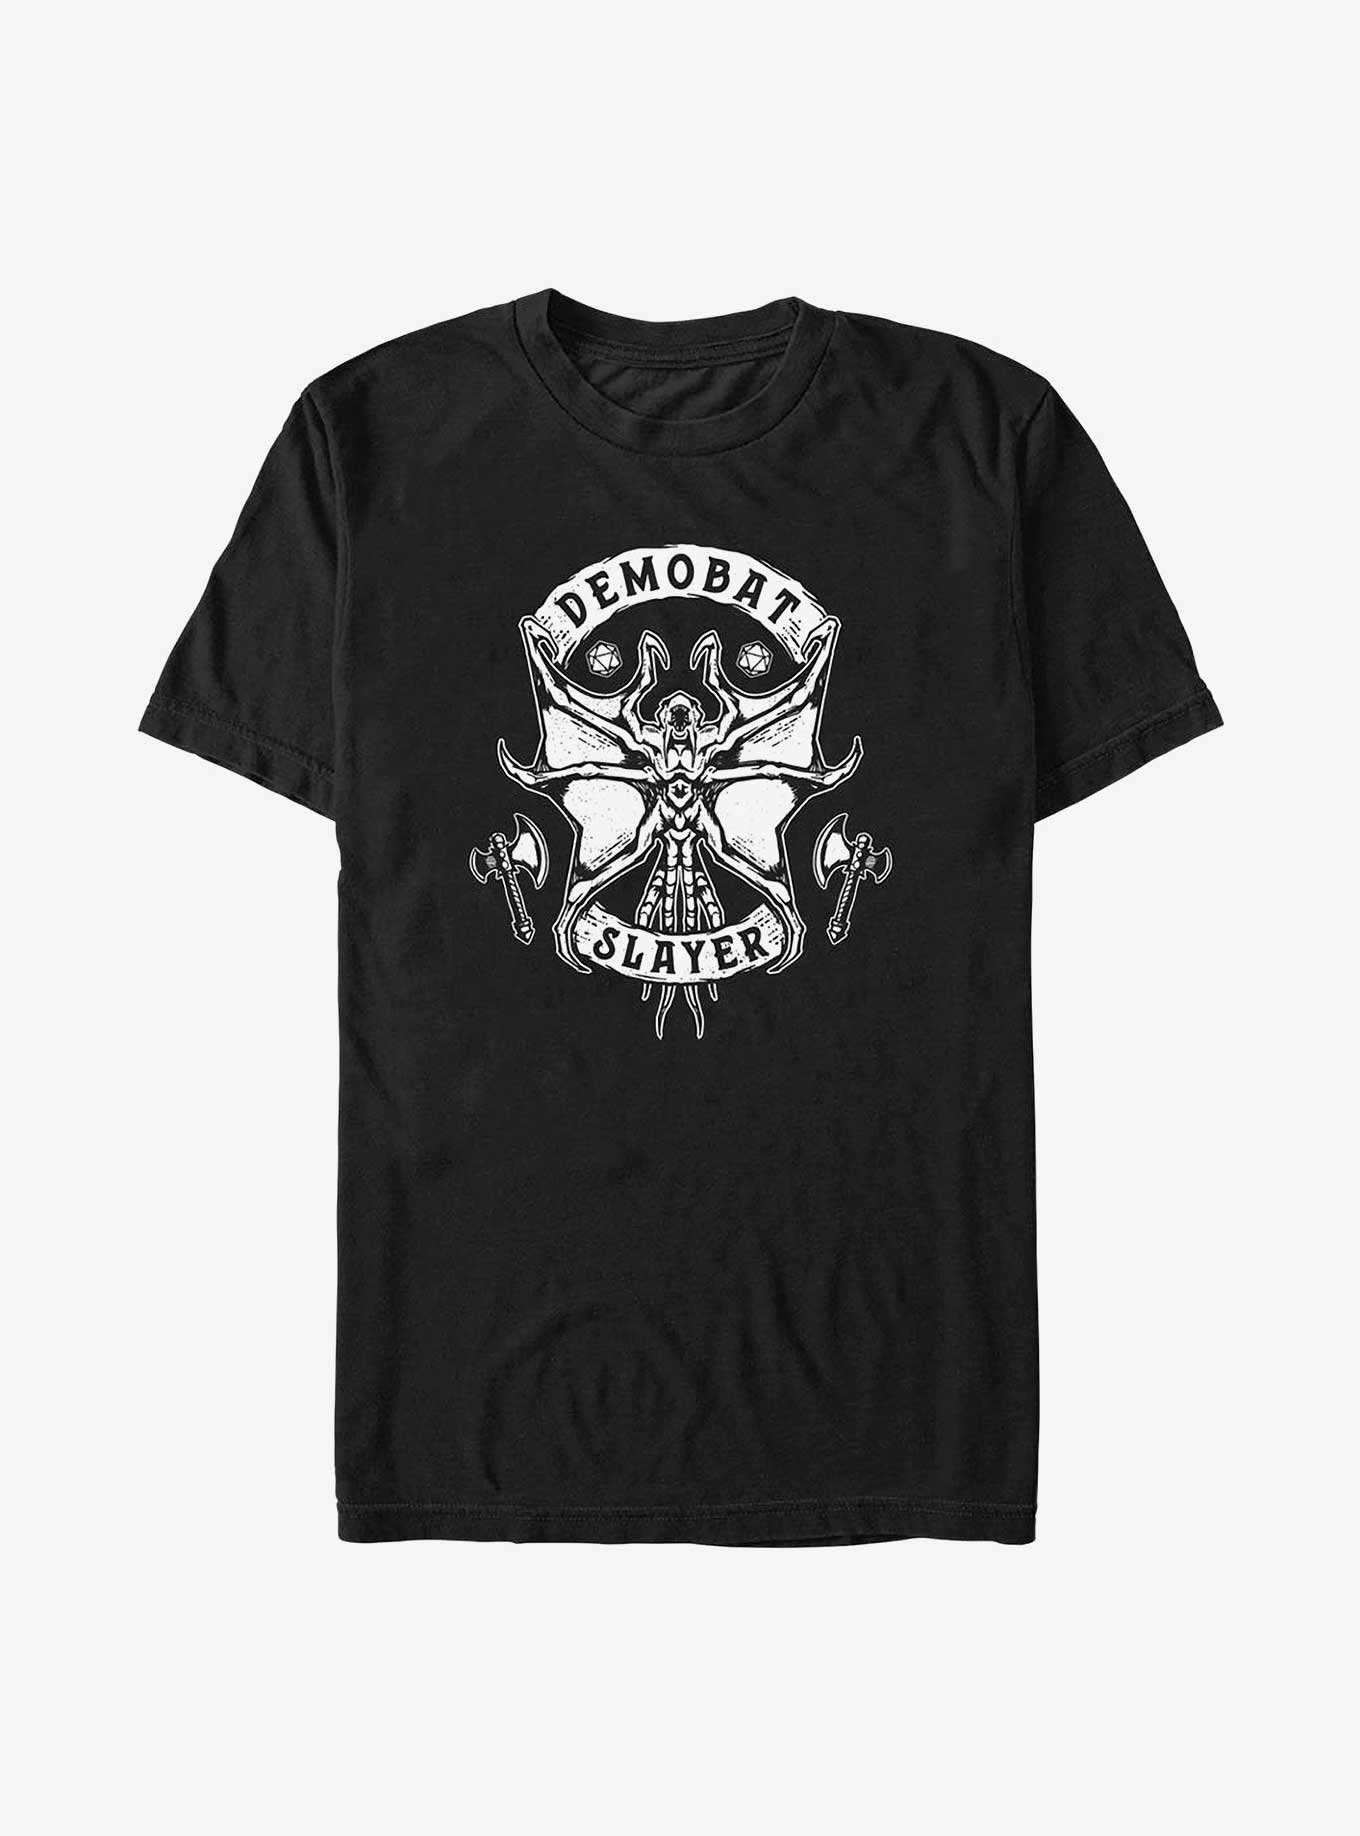 Stranger Things Dice Demobat Slayer T-Shirt, , hi-res